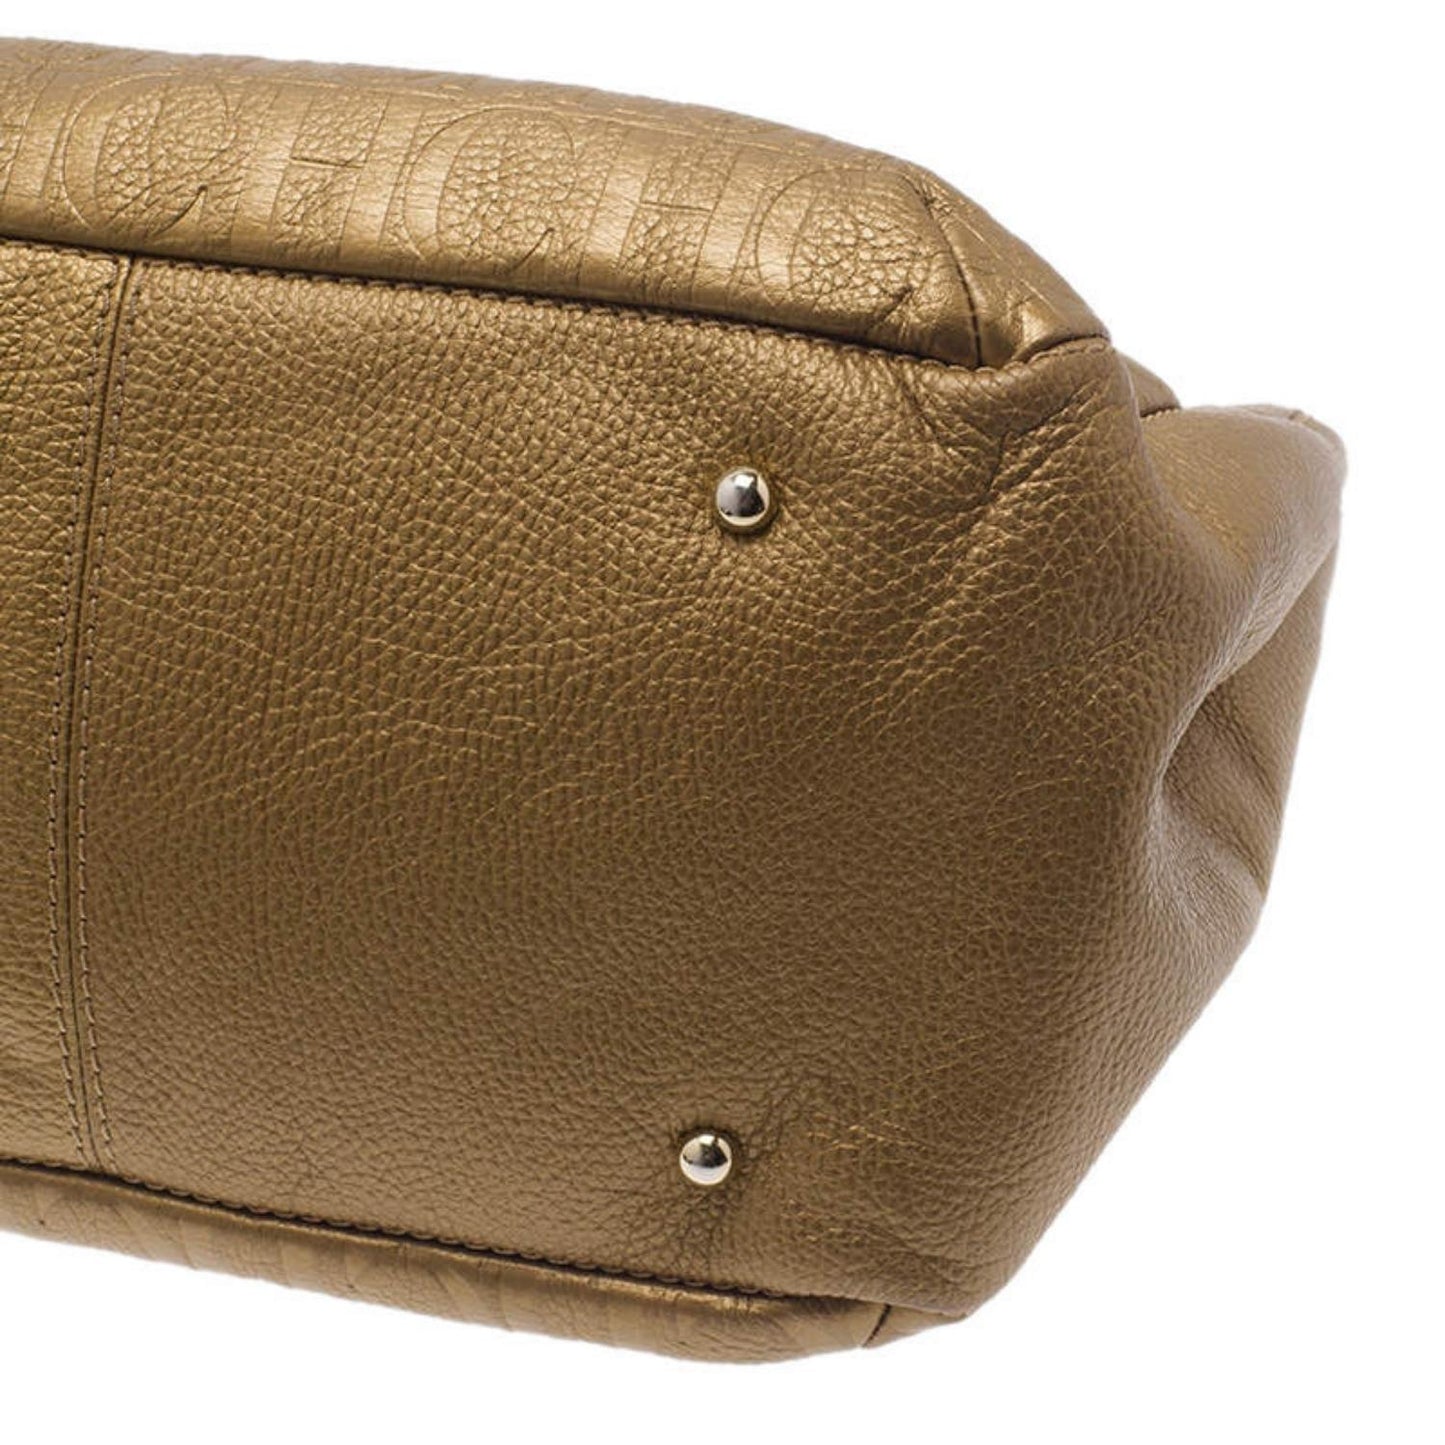 Gold Monogram Leather Audrey Tote Bag